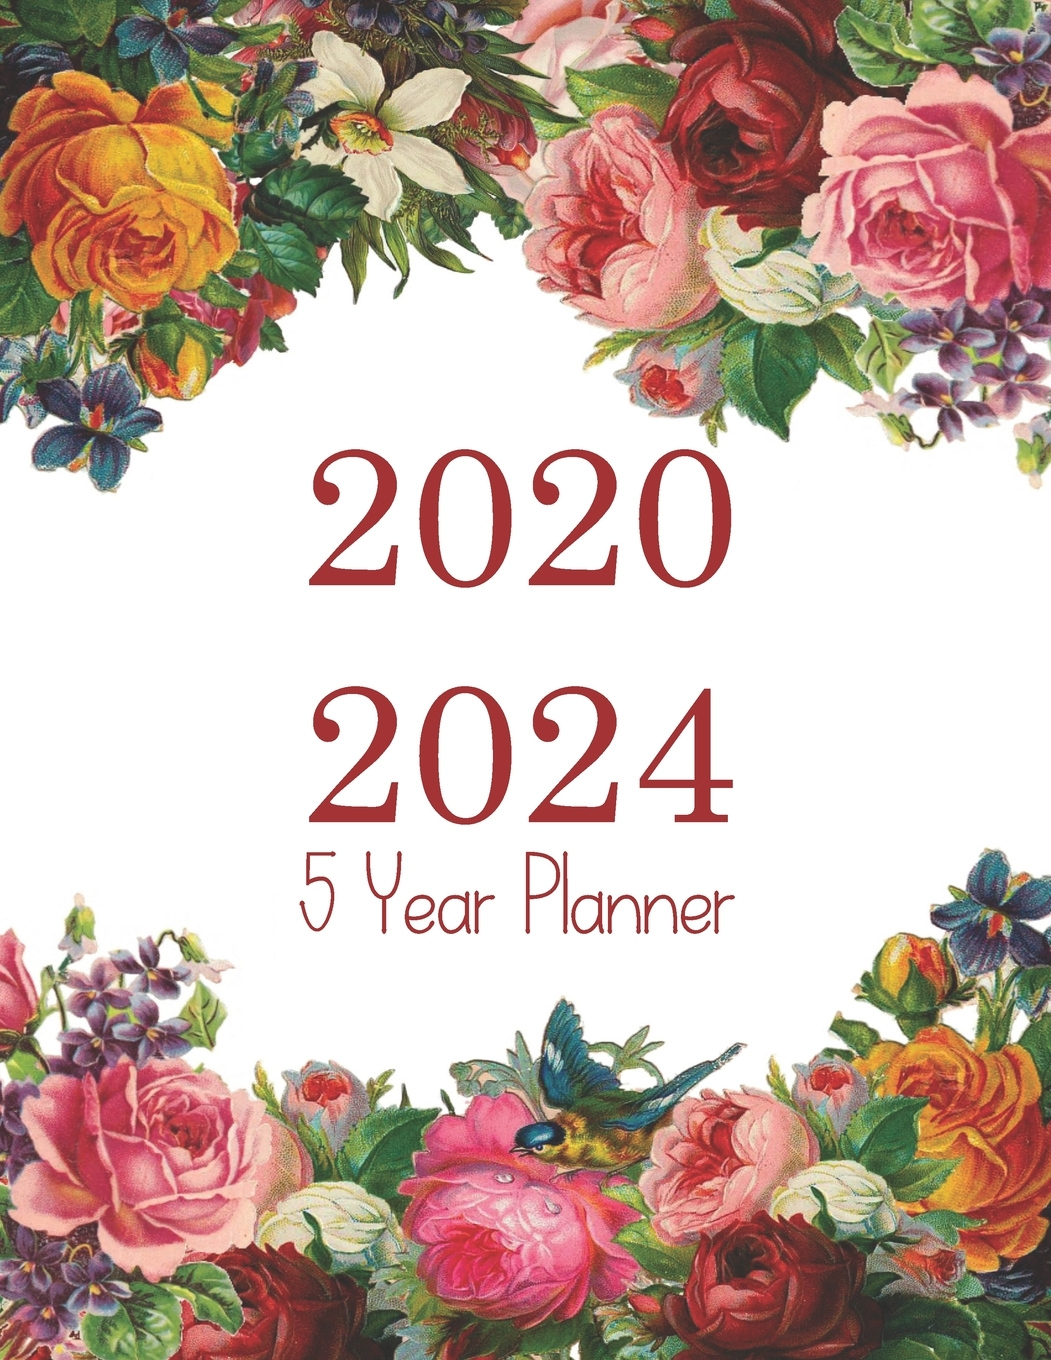 Planner And Calendar: 2020 2024 5 Year Planner: 5 Years Free 5 Year Calendar Planner